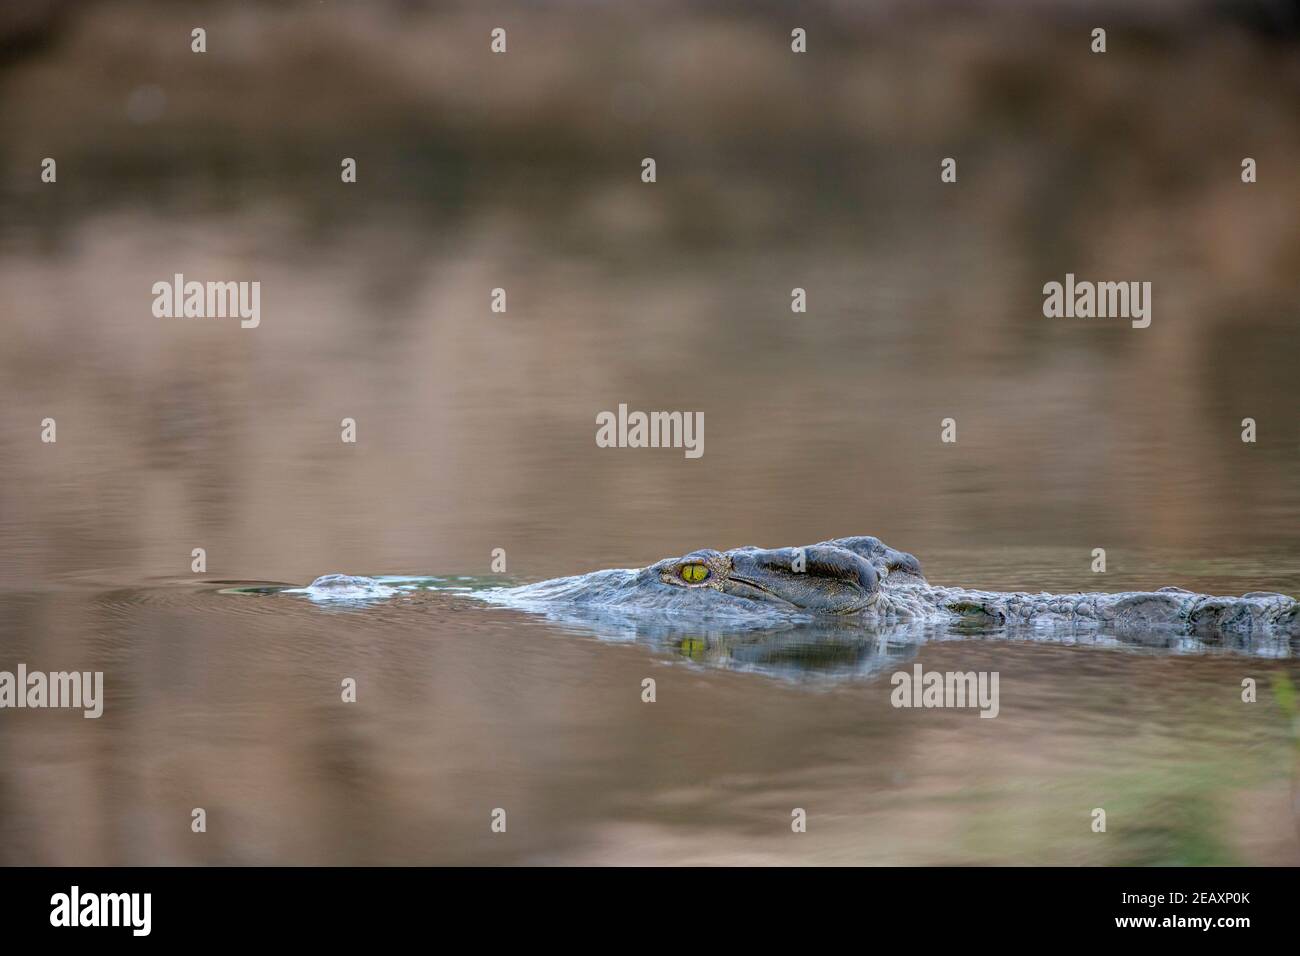 A large Nile Crocodile Crocodylus niloticus seen in Zimbabwe's Mana Pools National Park. Stock Photo